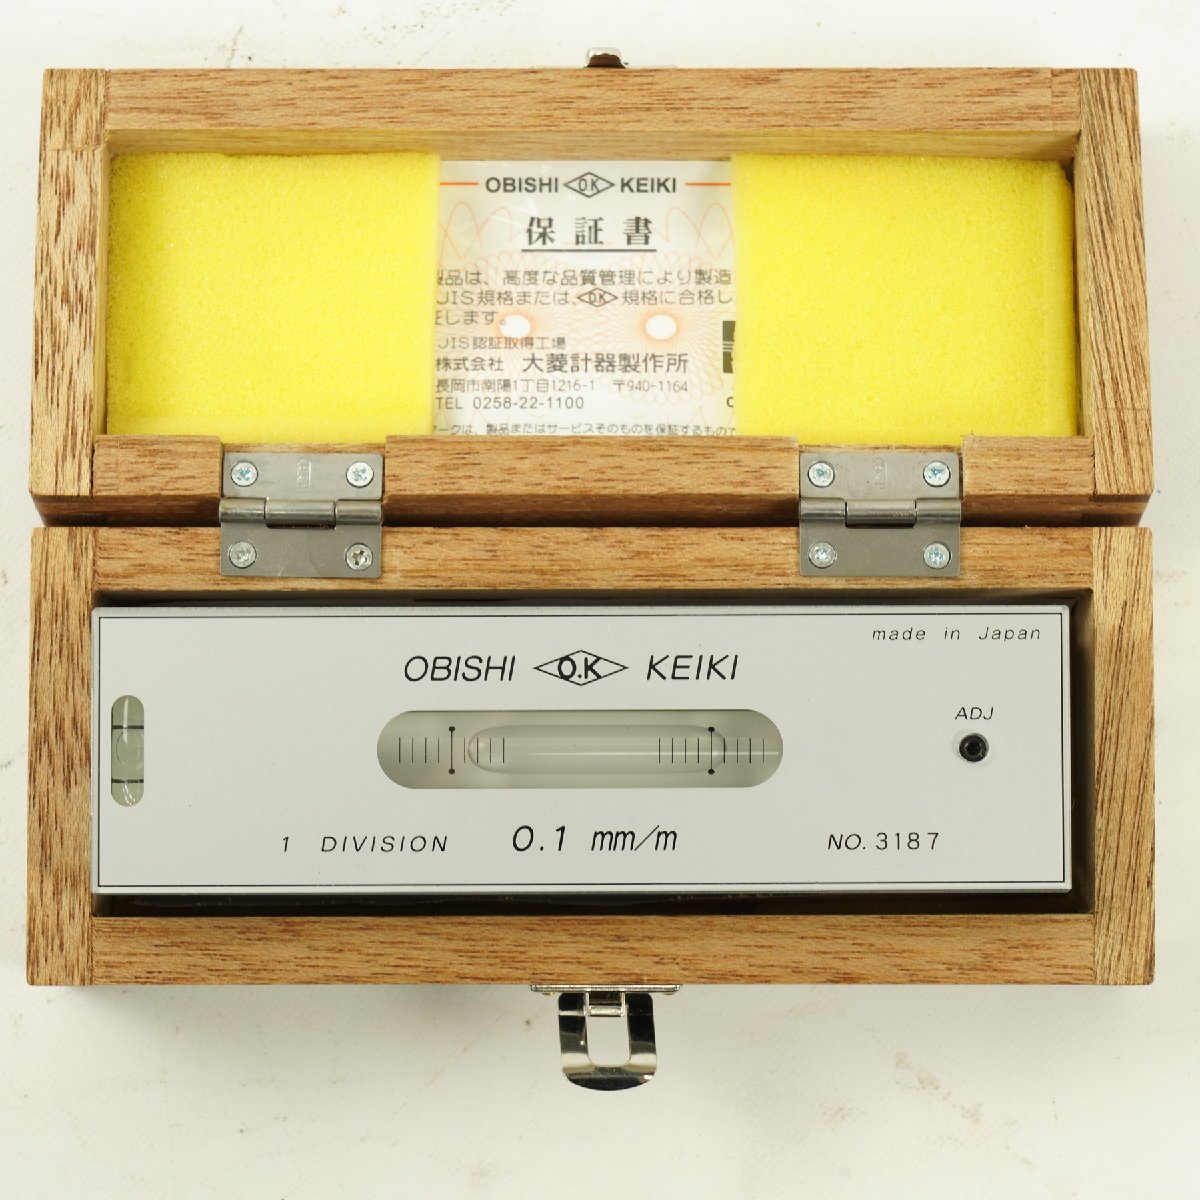 OBISHI 大菱 平形水準器 AD153 SIZE150 1DIV0.1 0.1mm/m [B2190]_画像2